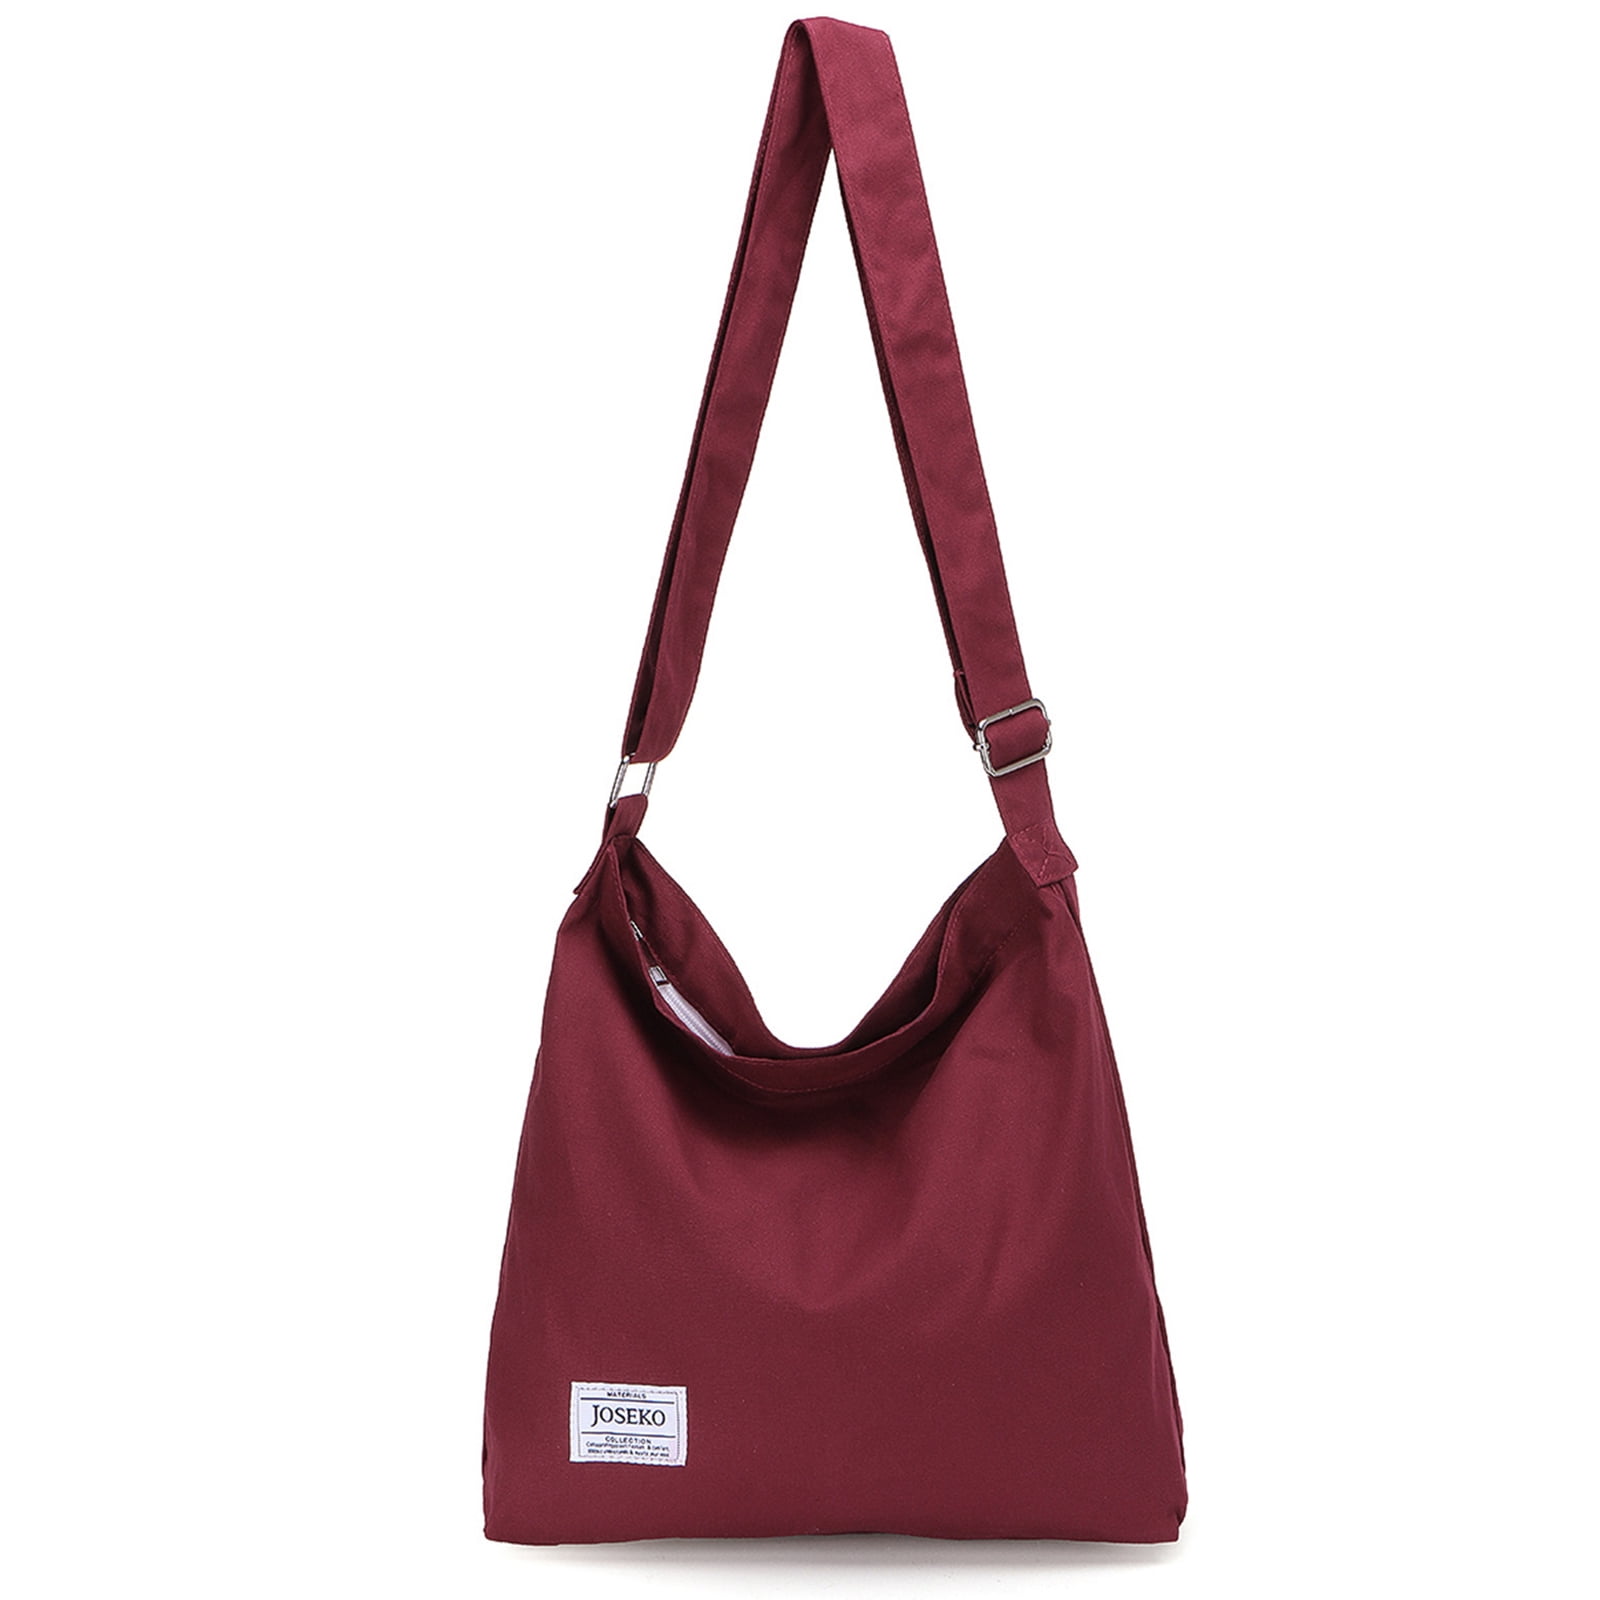 Canvas Women Messenger Bags Letter Print Fashion Travel Handbags Travel Tote Female Casual Shopping Bag